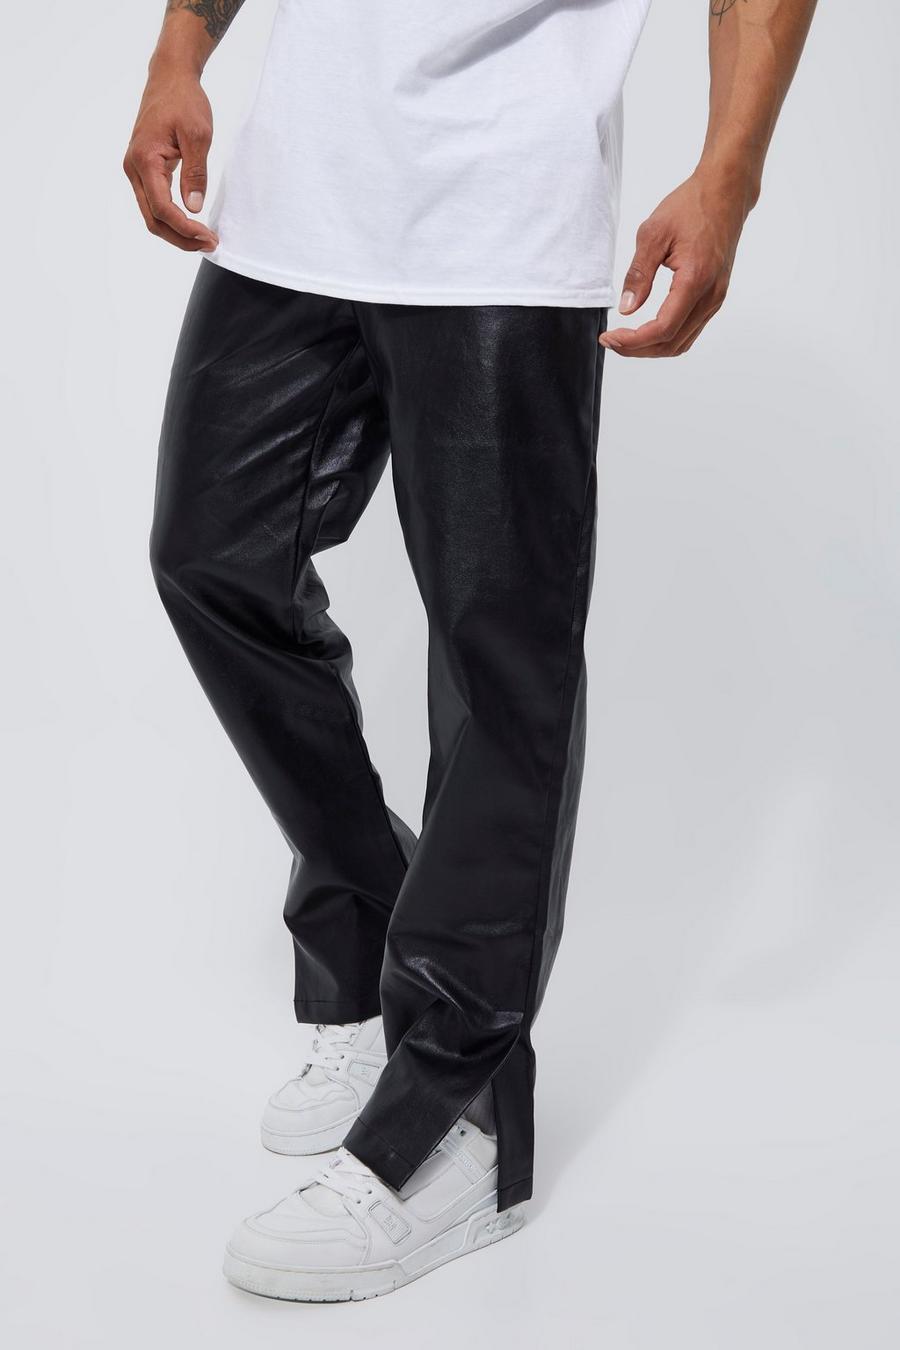 Black schwarz Fixed Waist Straight PU Carabiner Clip Trouser